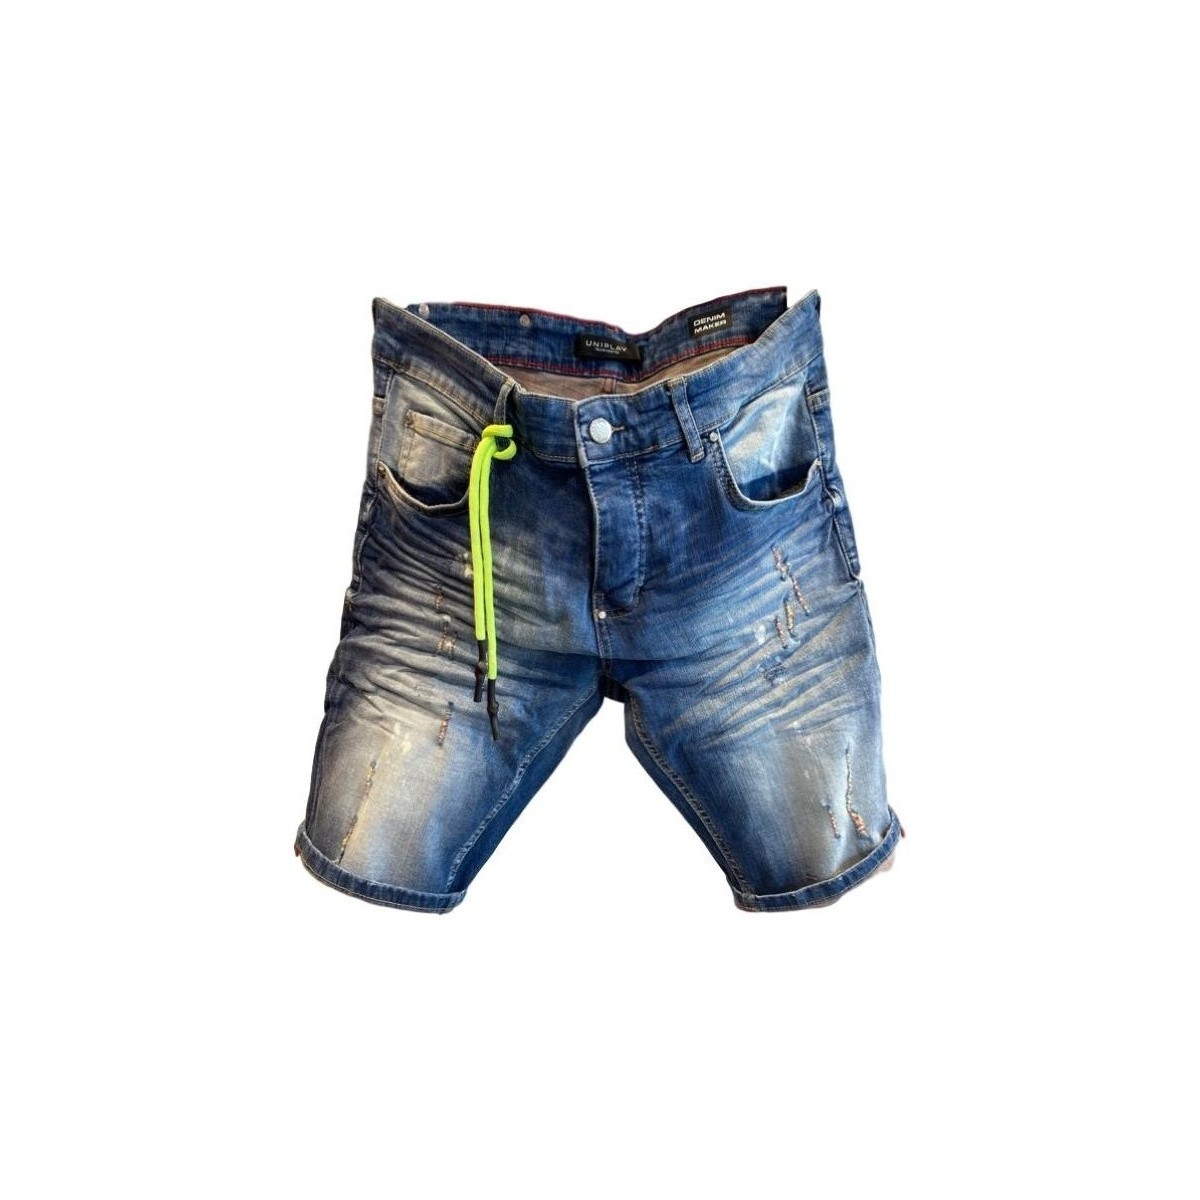 textil Shorts / Bermudas Ovds Overdose Jeans Uniplay Denim Italia Azul Azul